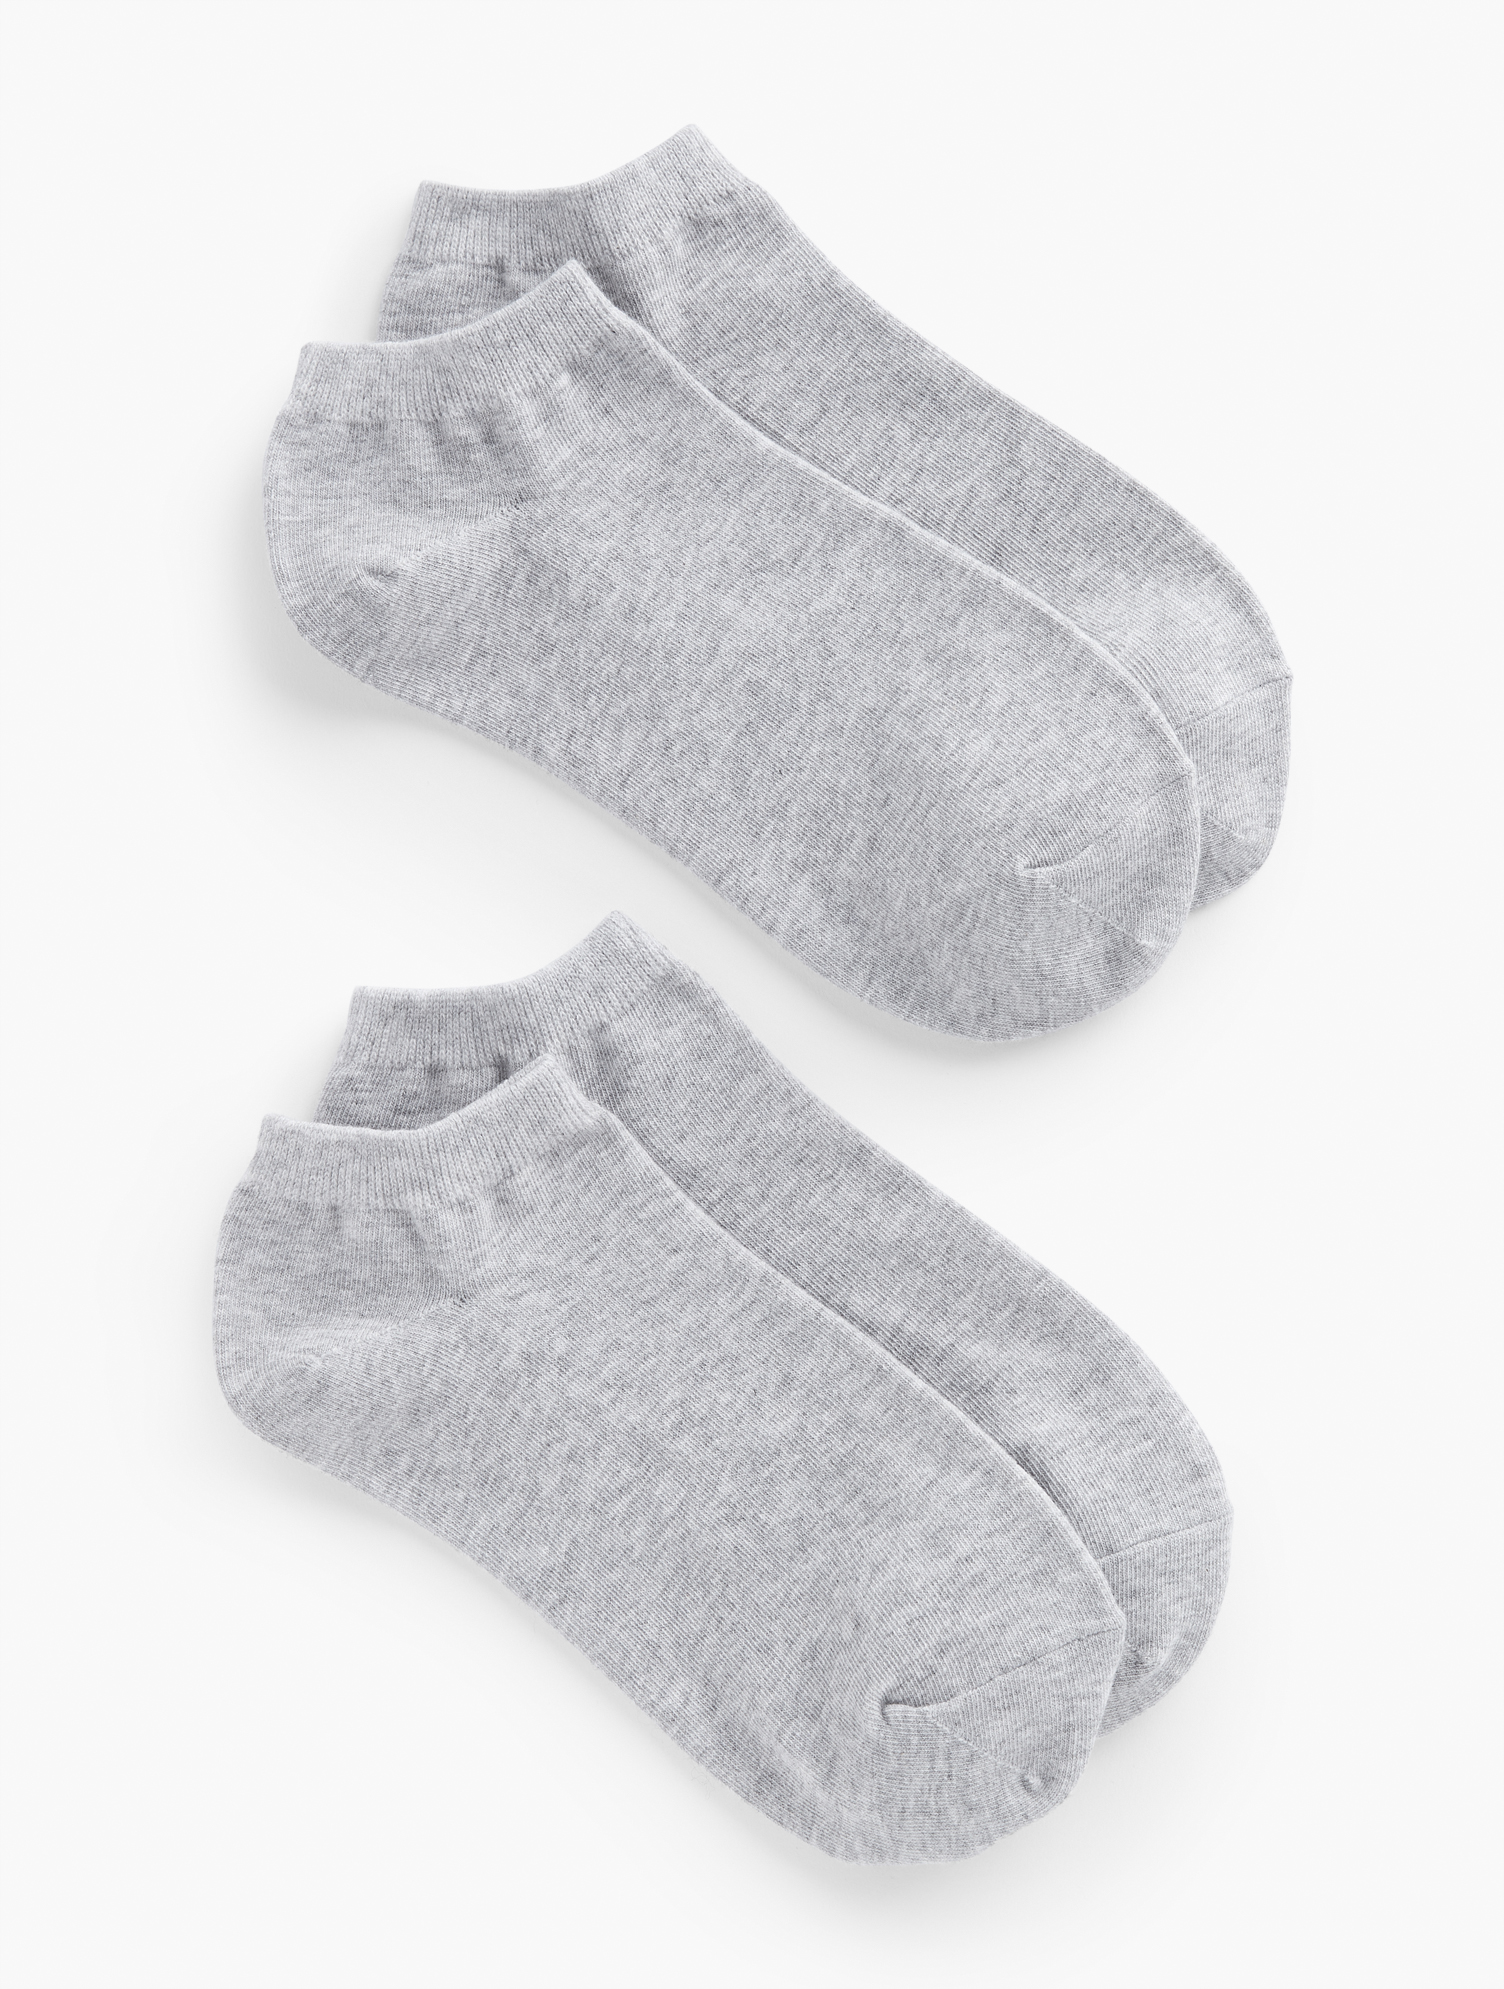 Talbots Two Pair Ankle Socks - Grey Sky Heather - 001